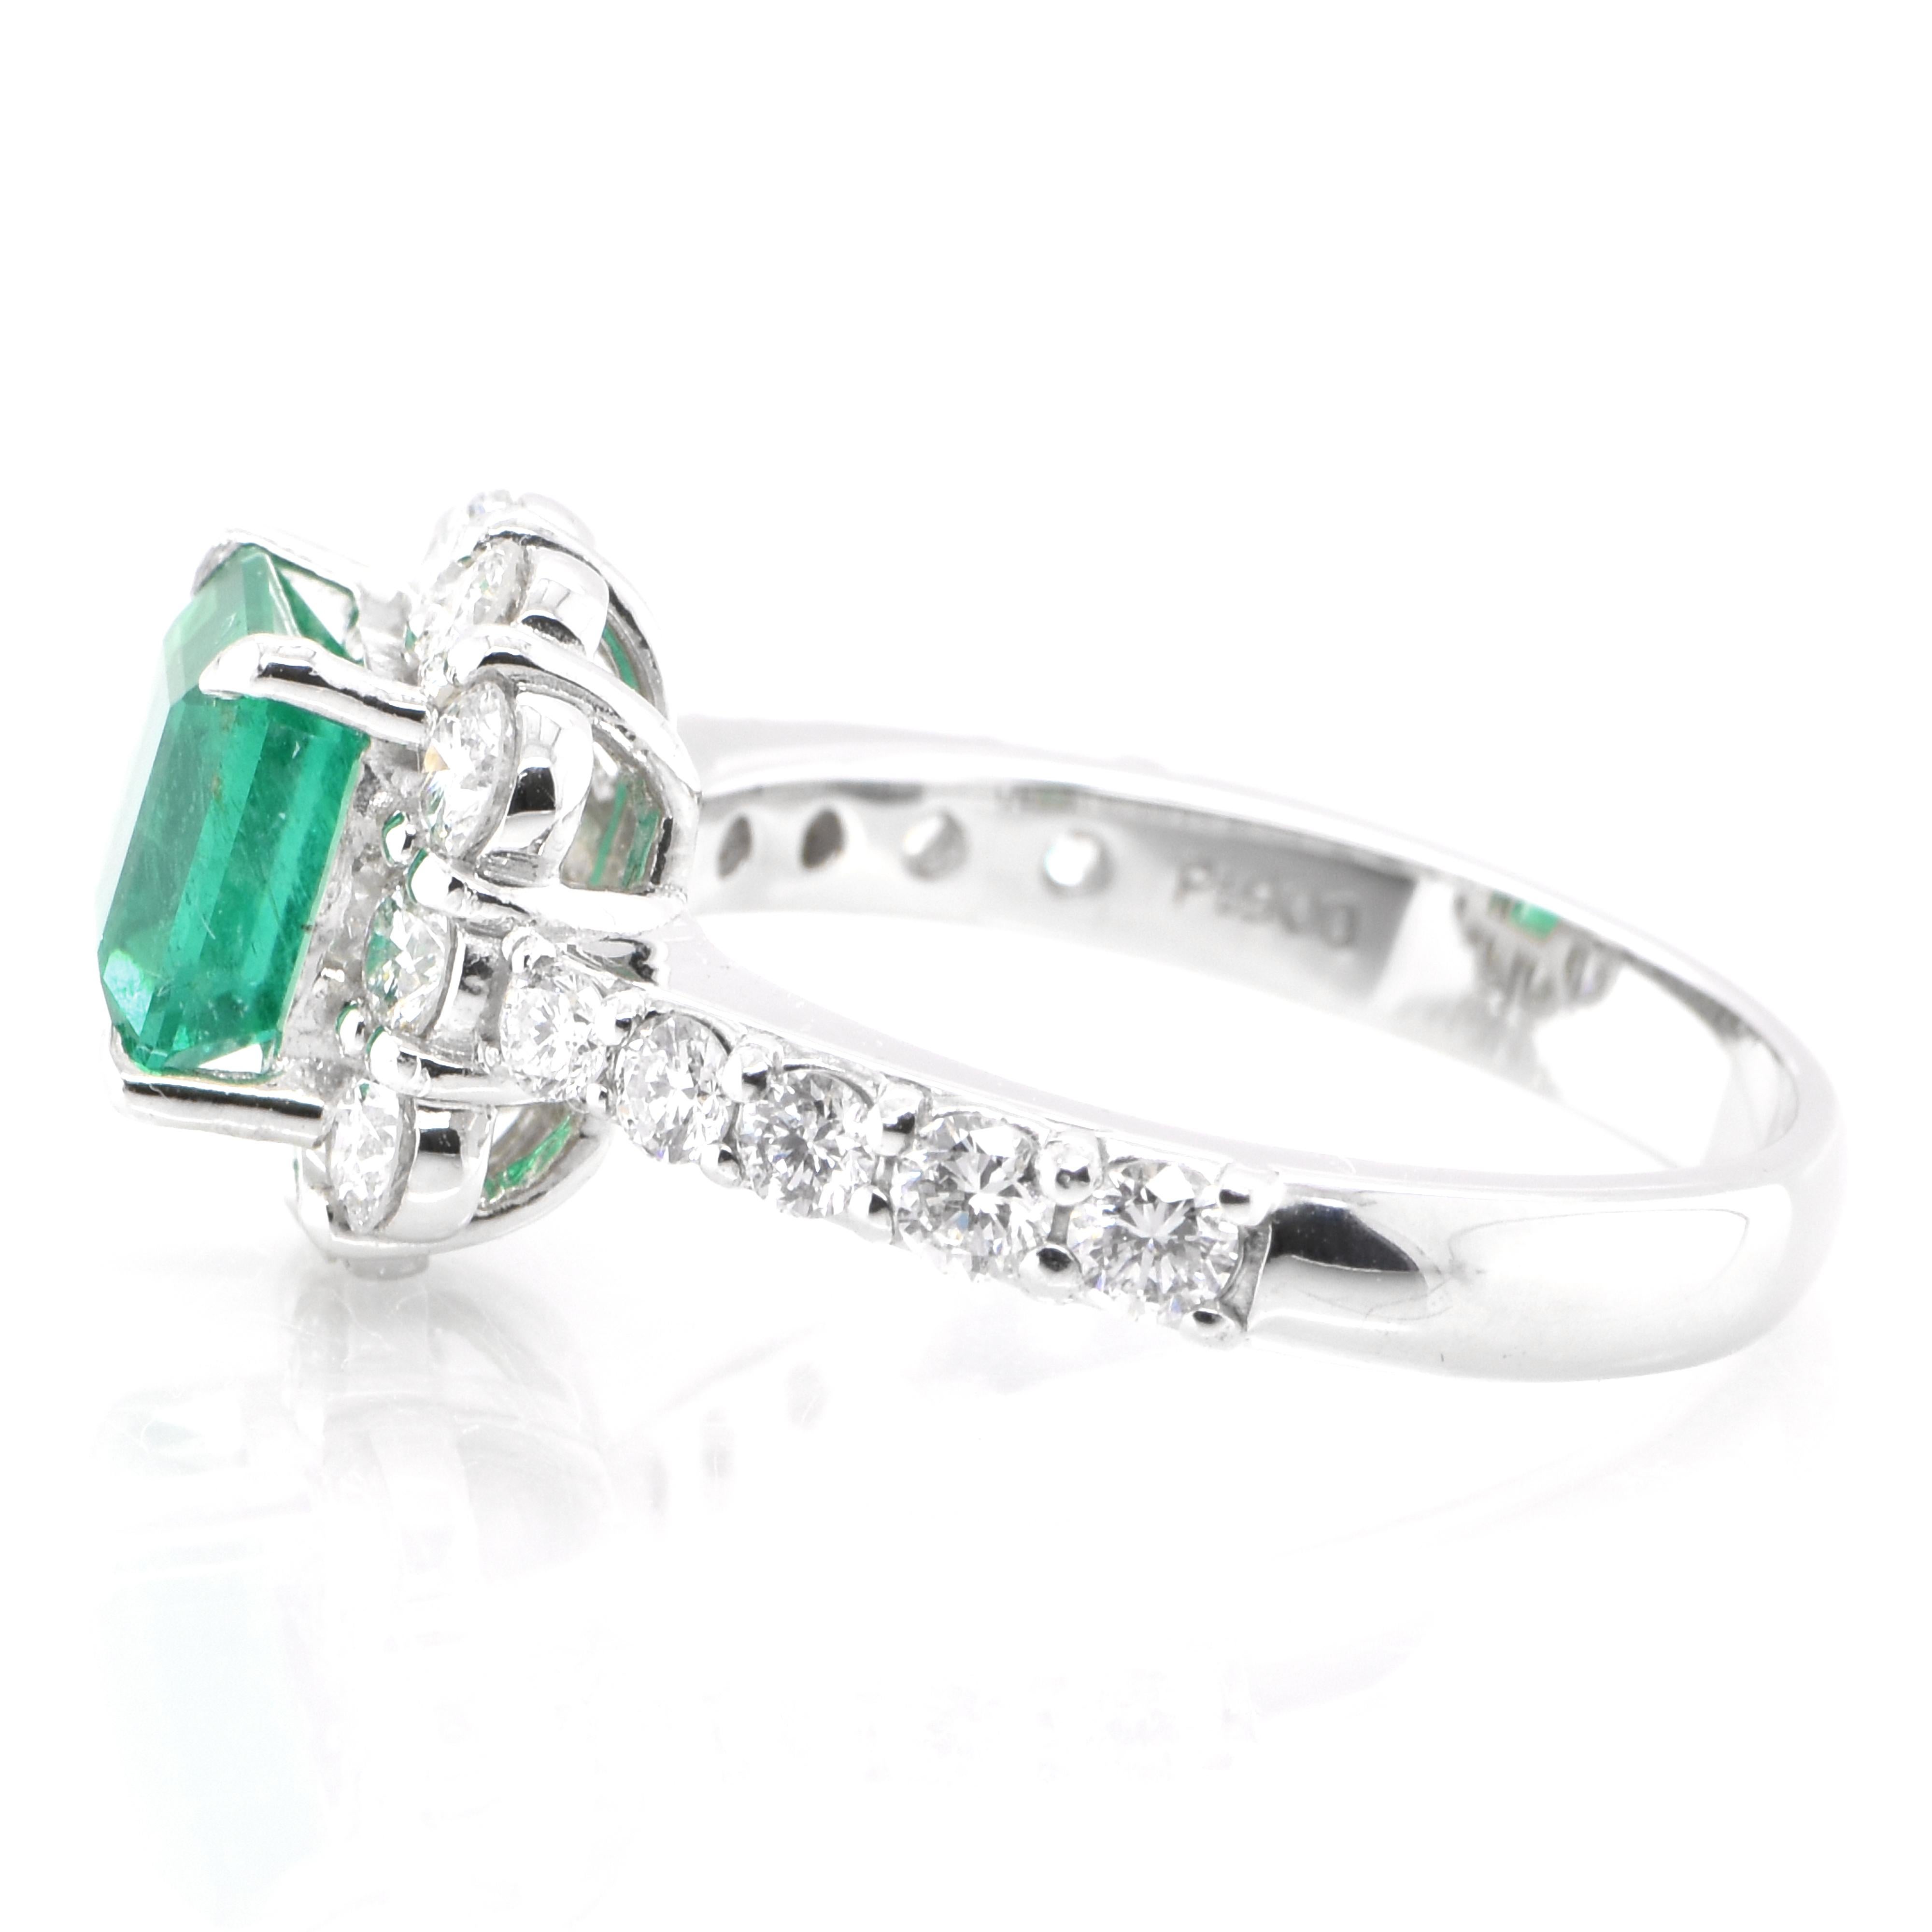 Emerald Cut 1.36 Carat Natural Colombian, Vivid Green Emerald Halo Ring Set in Platinum